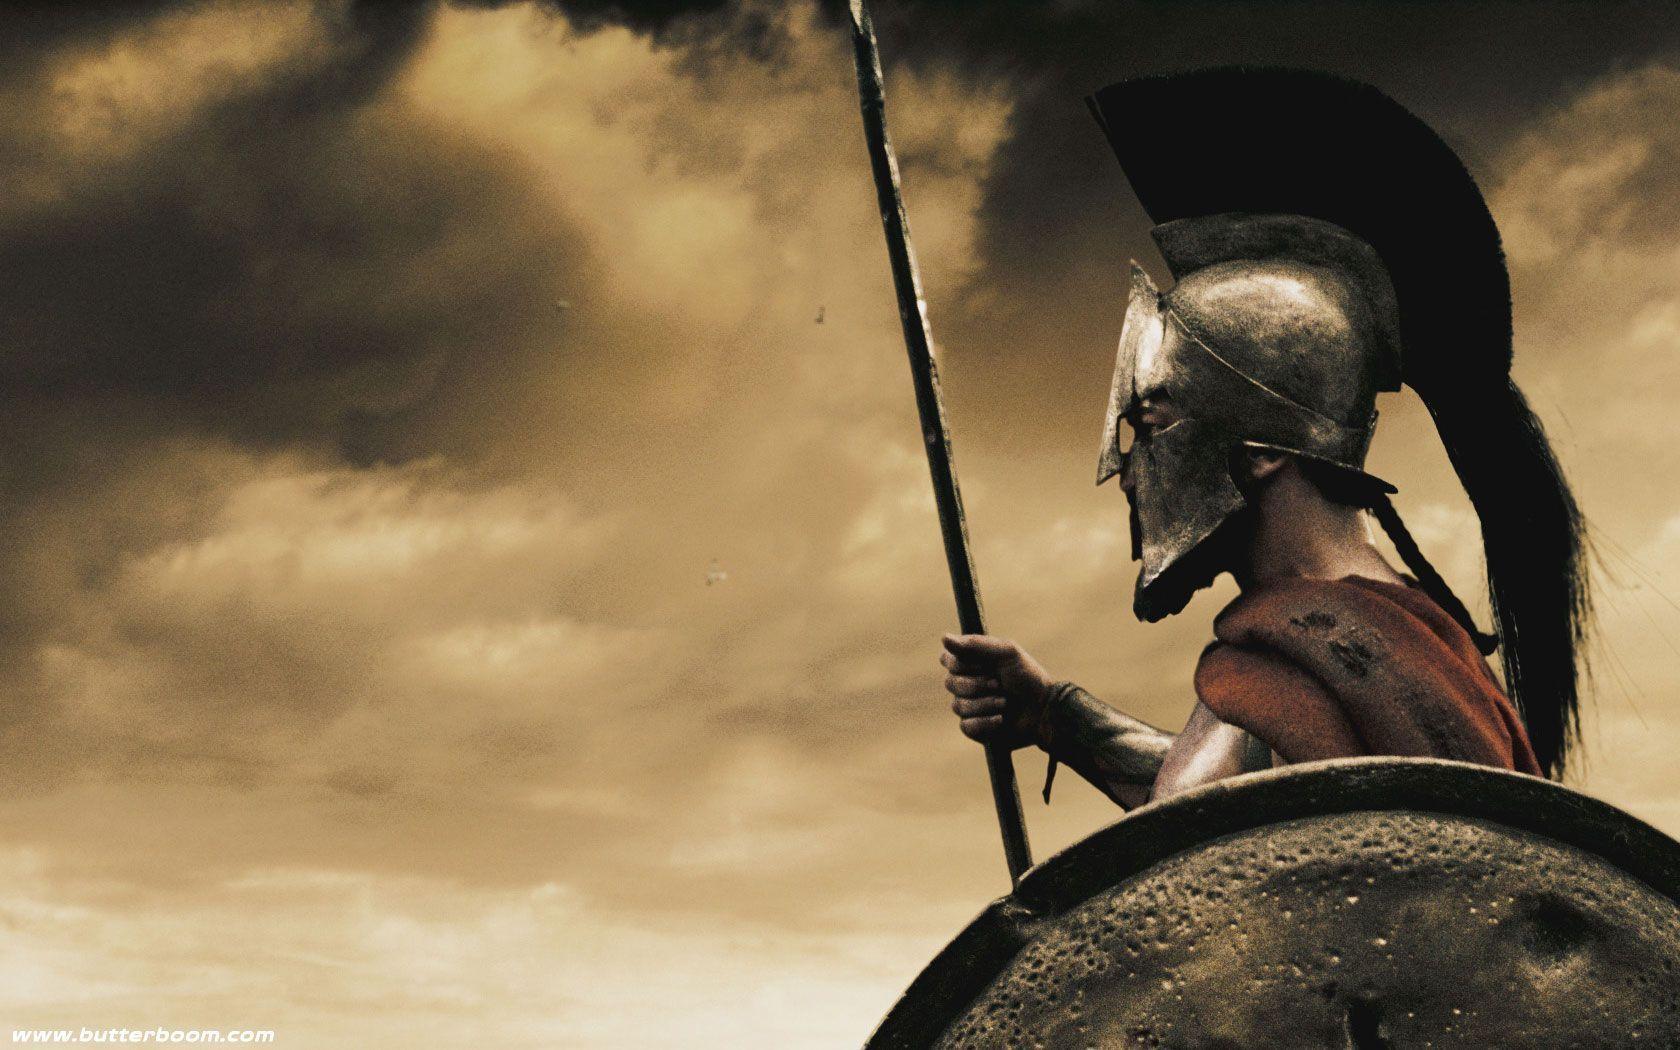 Download wallpaper: warrior Spartan, download photo, desktop